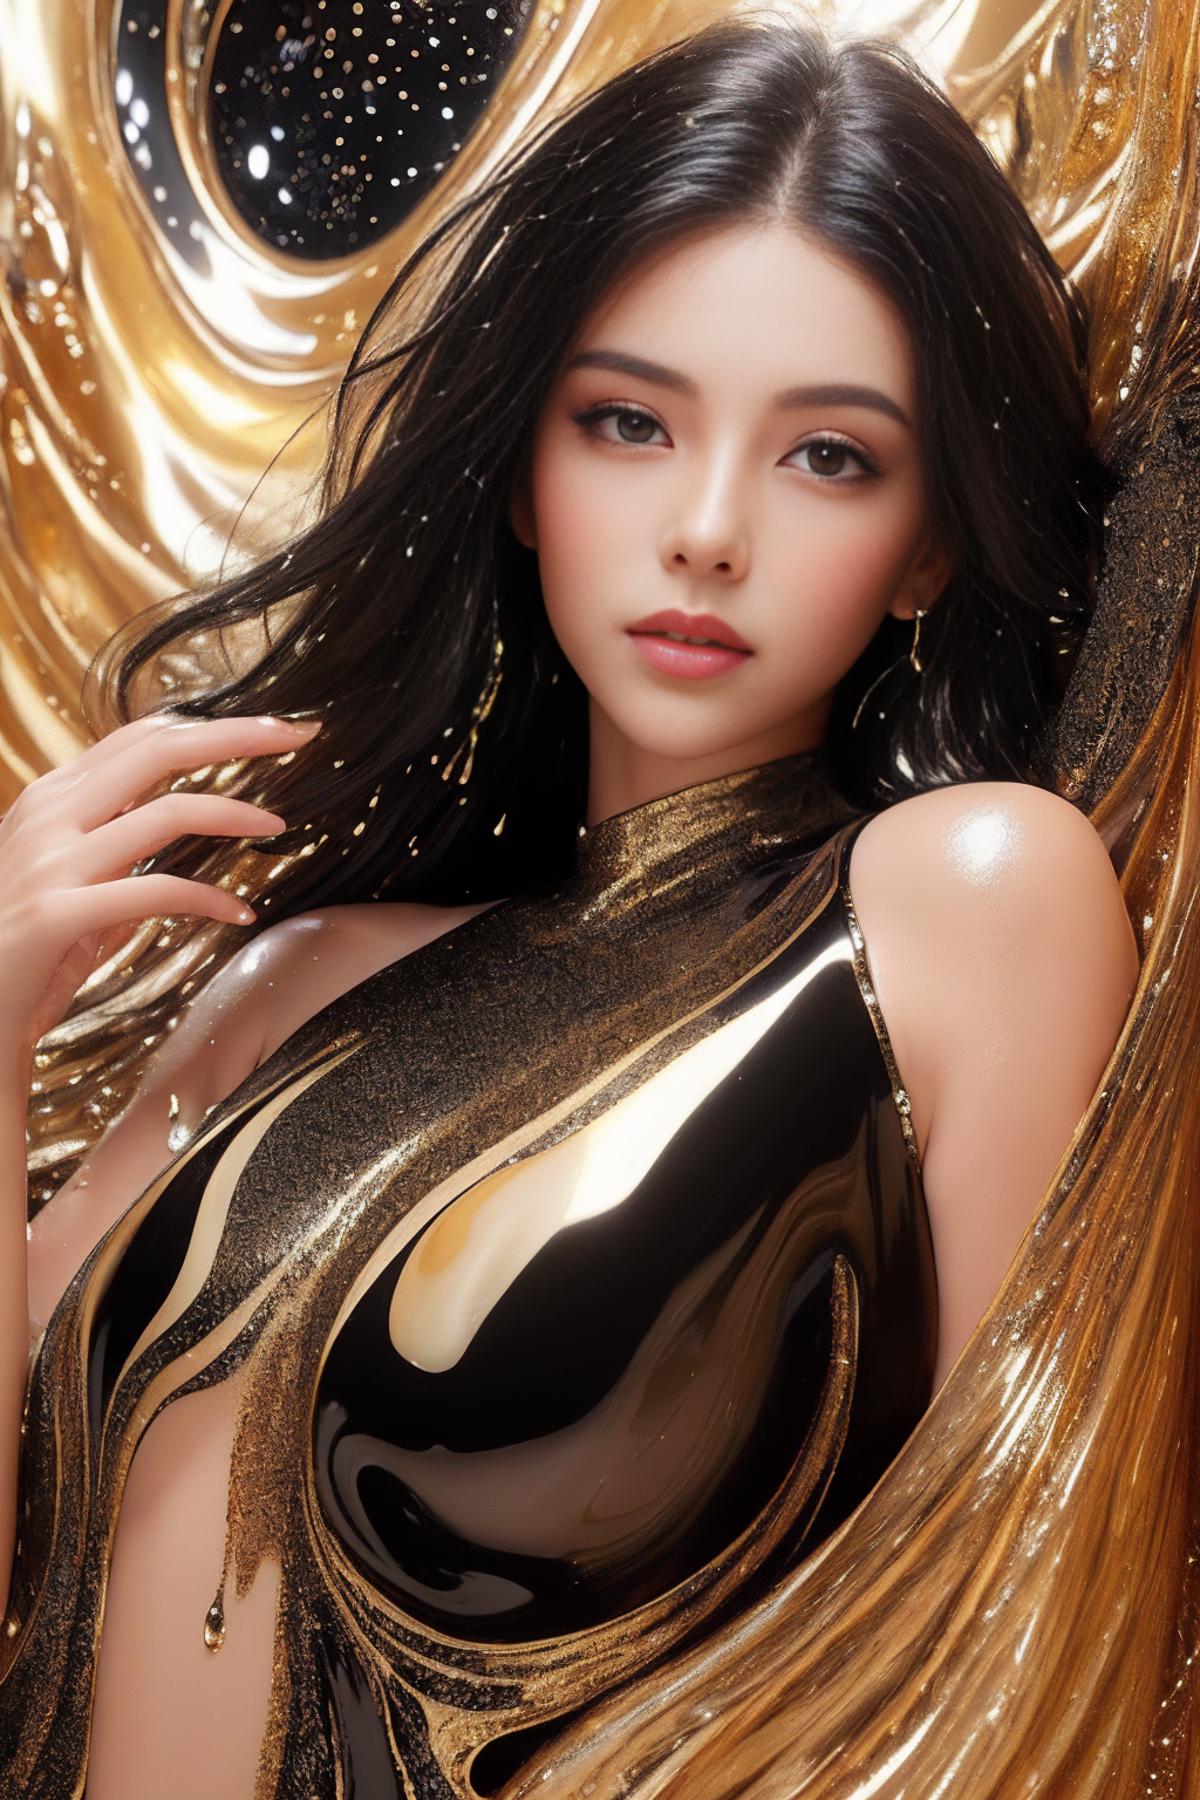 blackgold 沥金 image by brair001